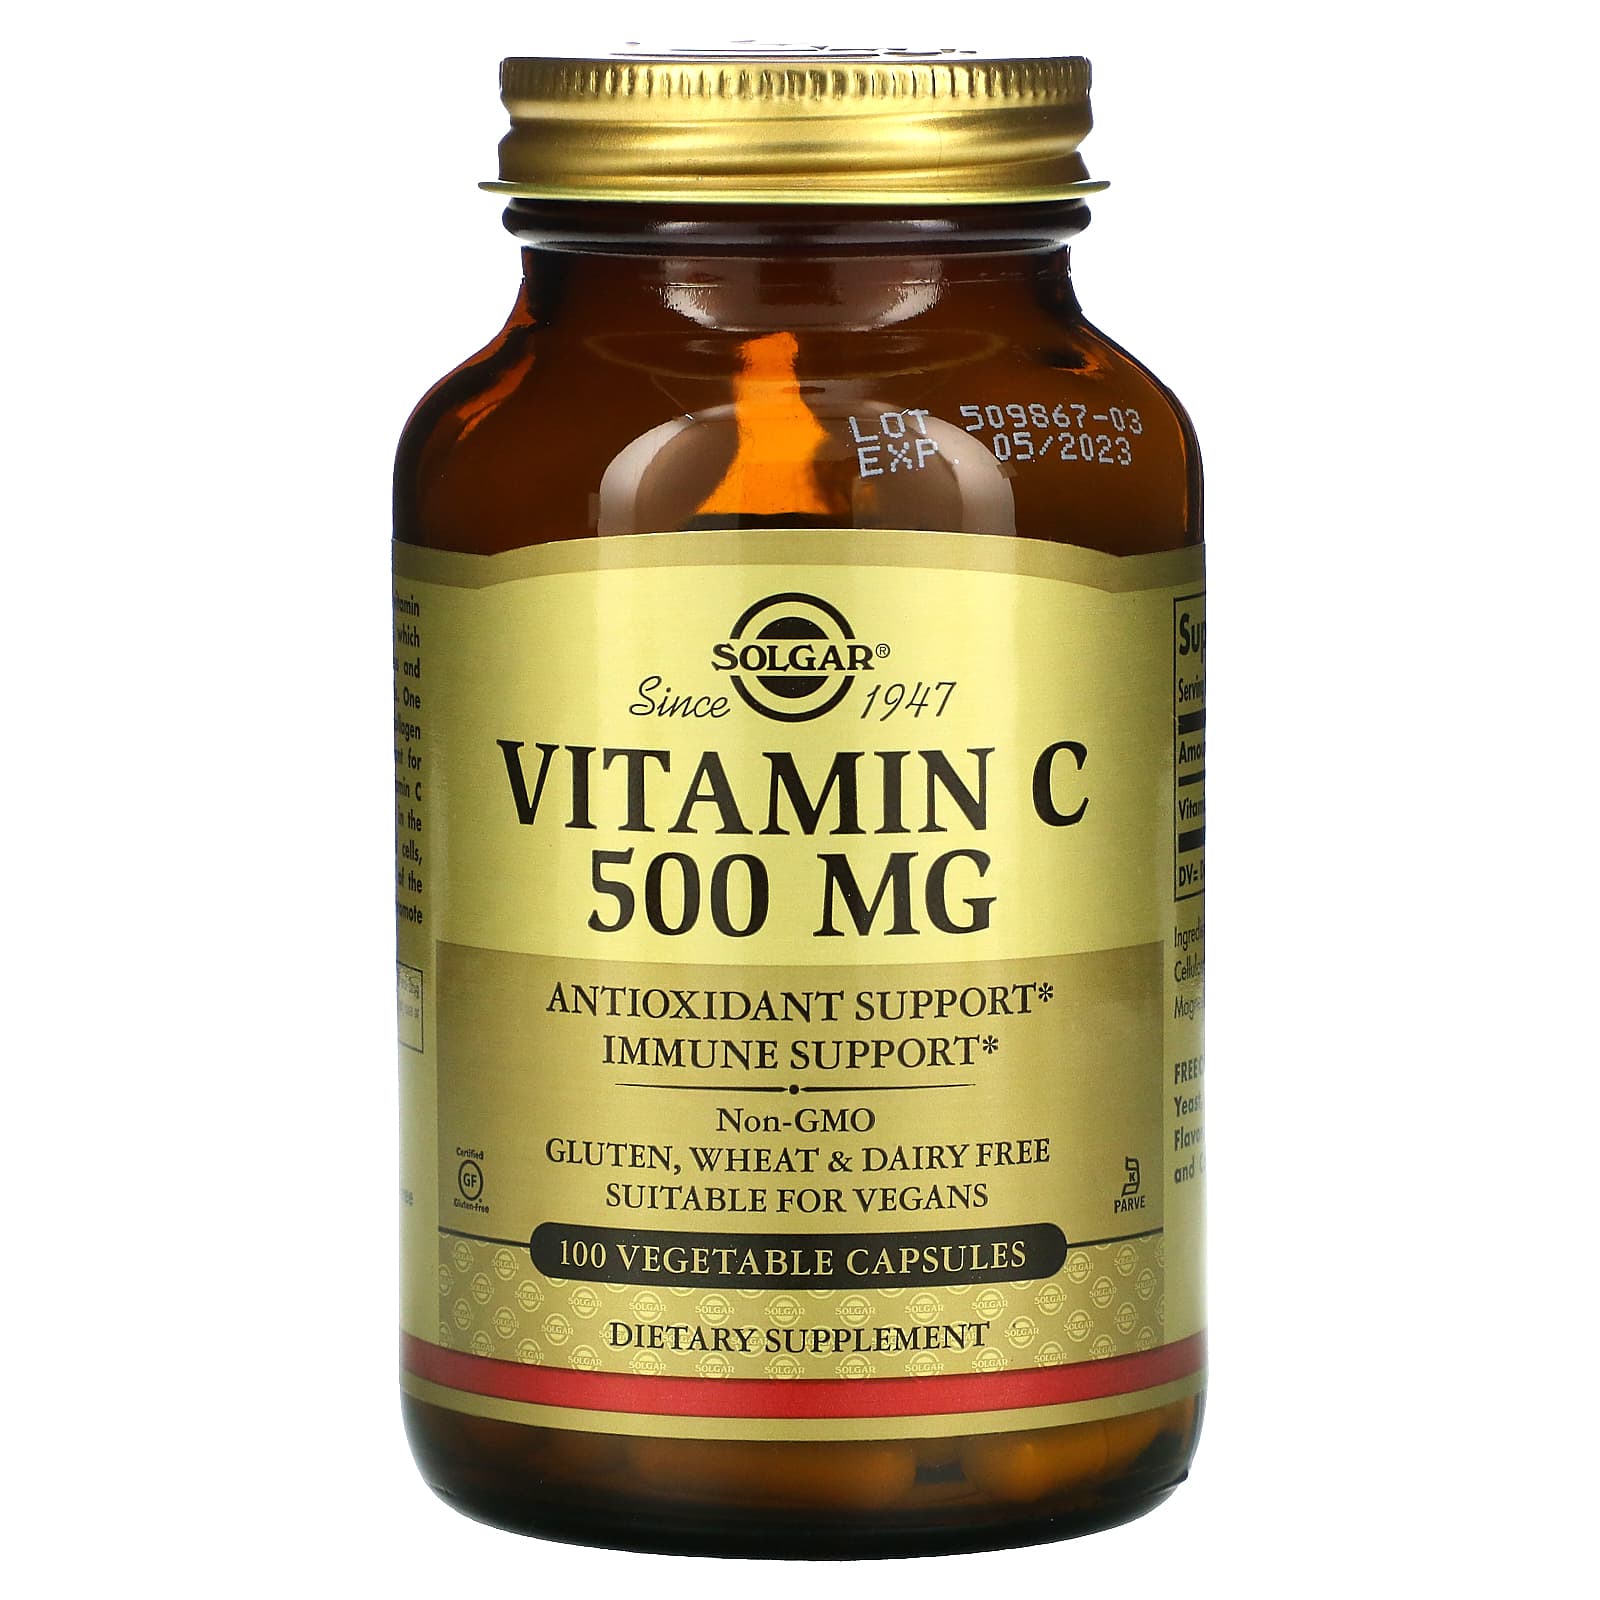 Solgar Vitamin C 500 Mg, 100 Vegetable Capsules